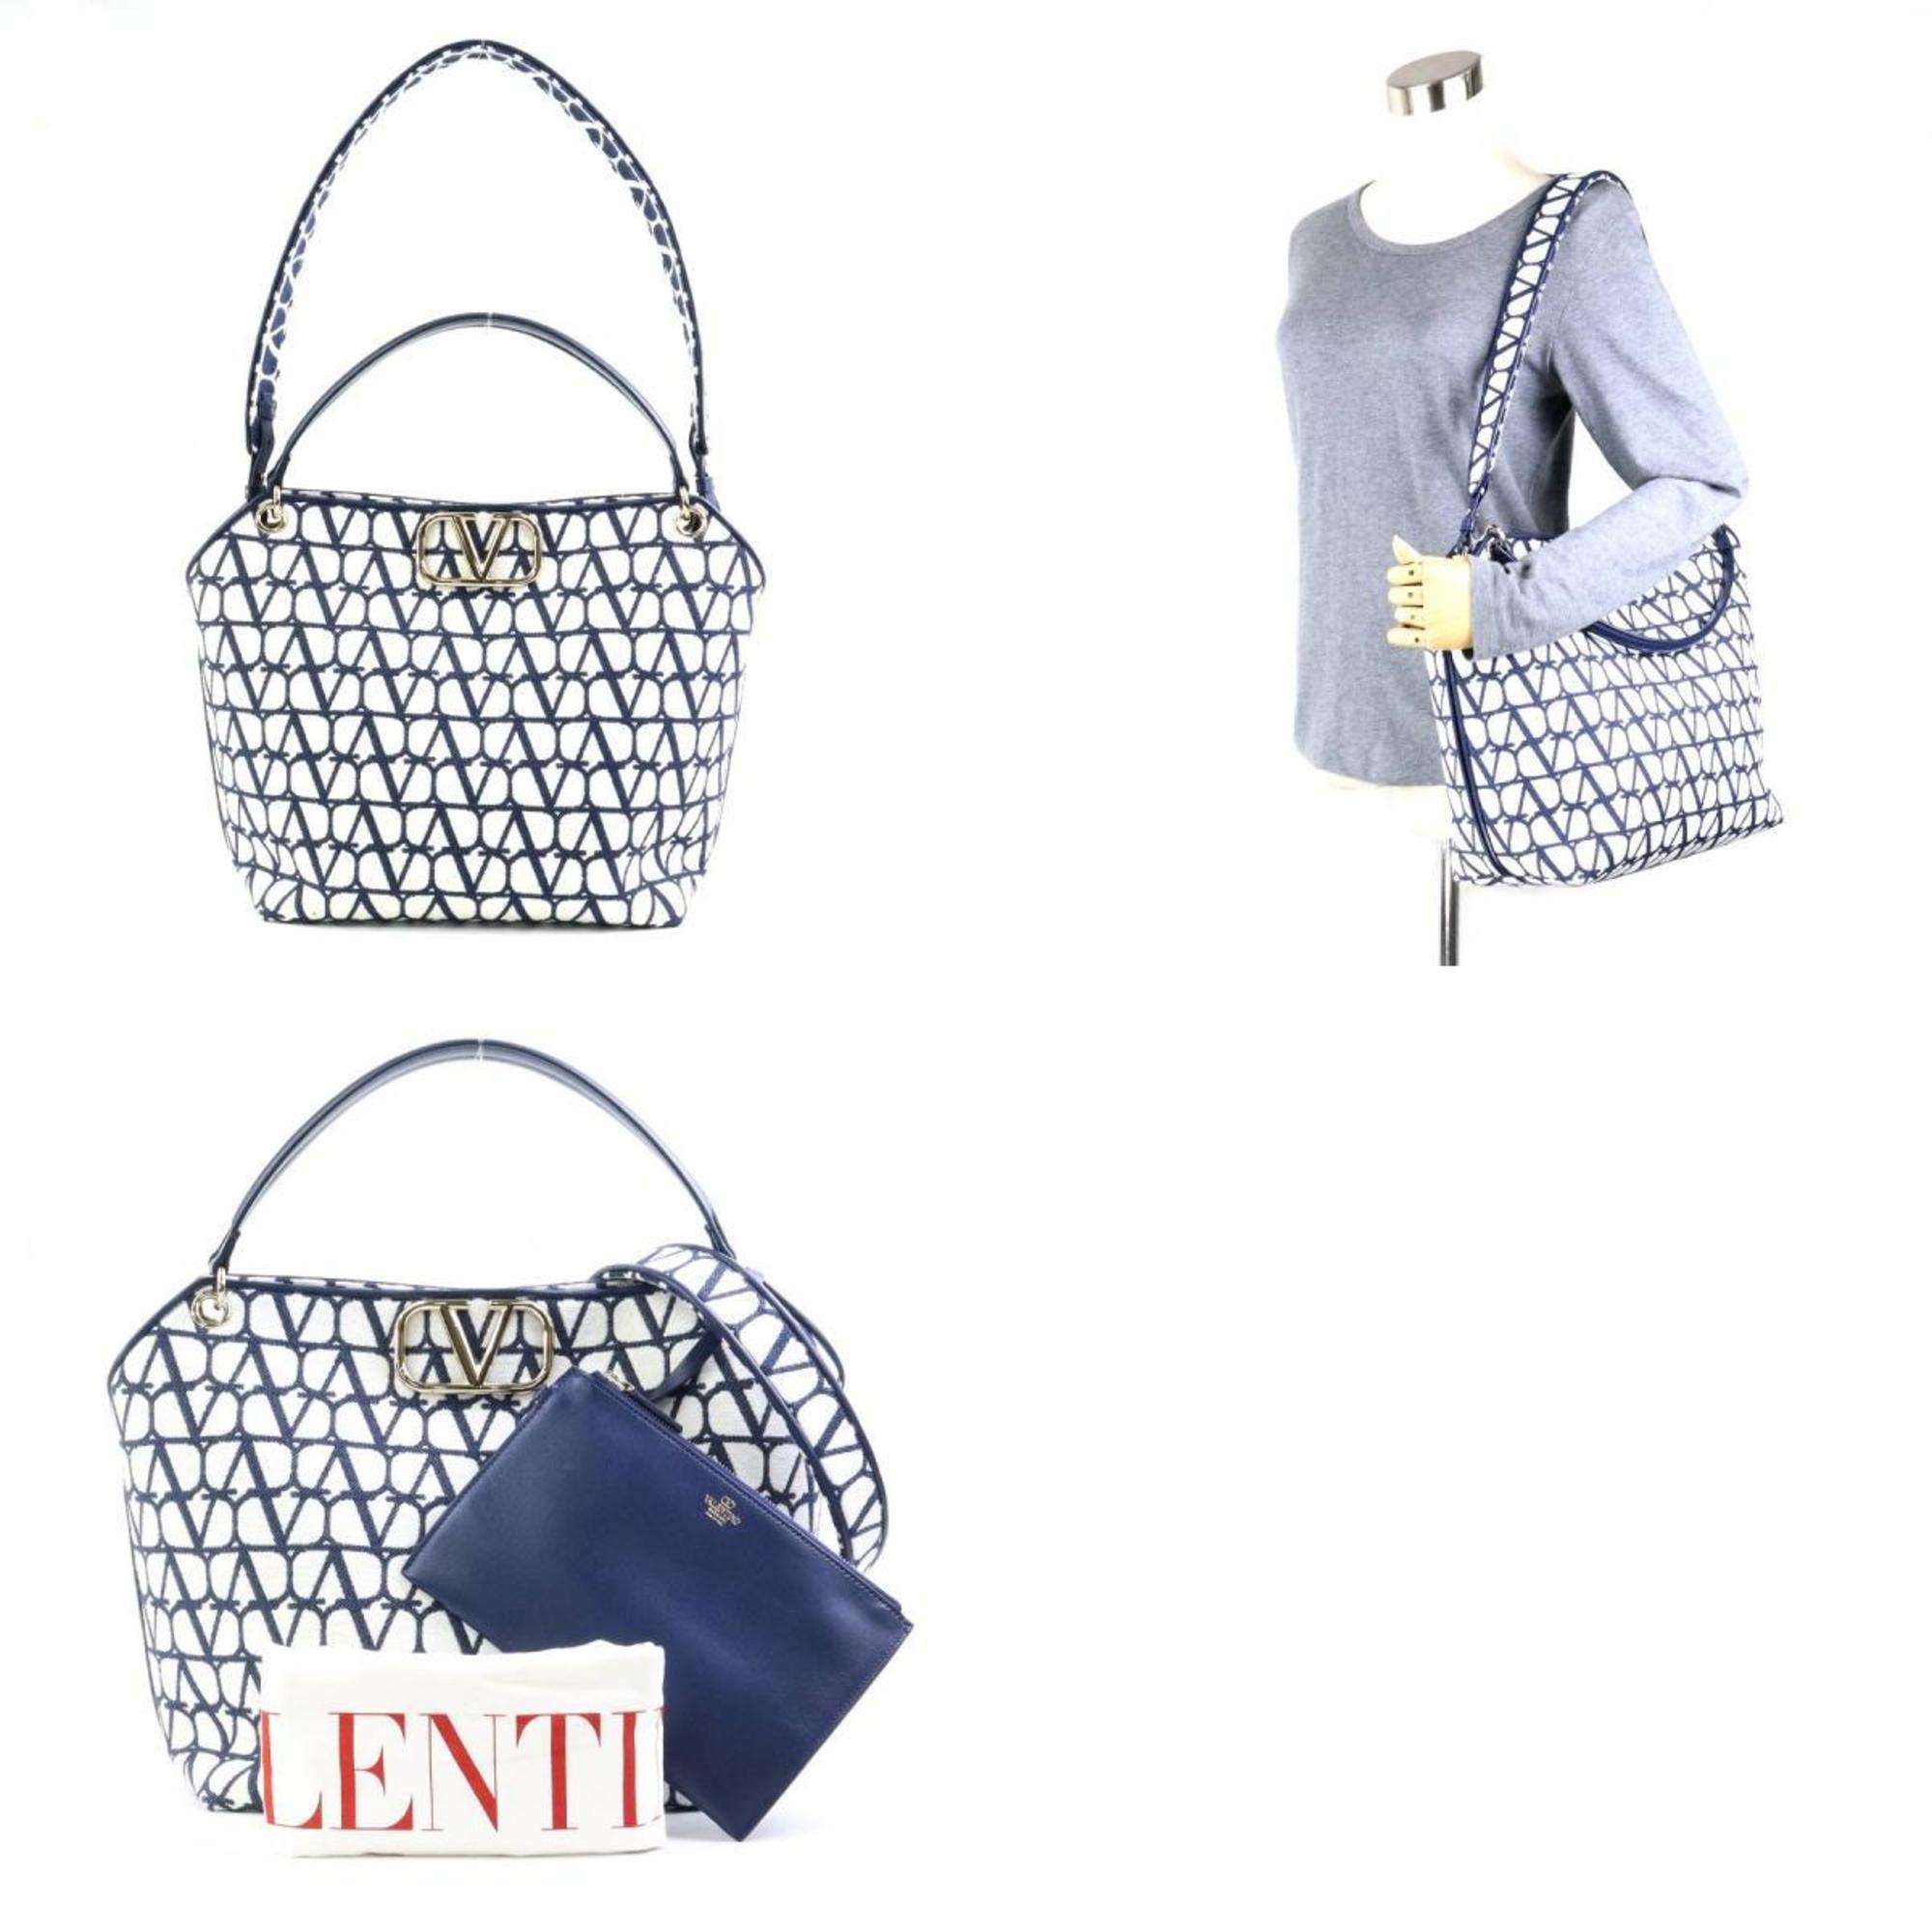 Valentino Garavani Handbag Shoulder Bag Toile Iconograph Canvas/Leather Navy x White Ladies